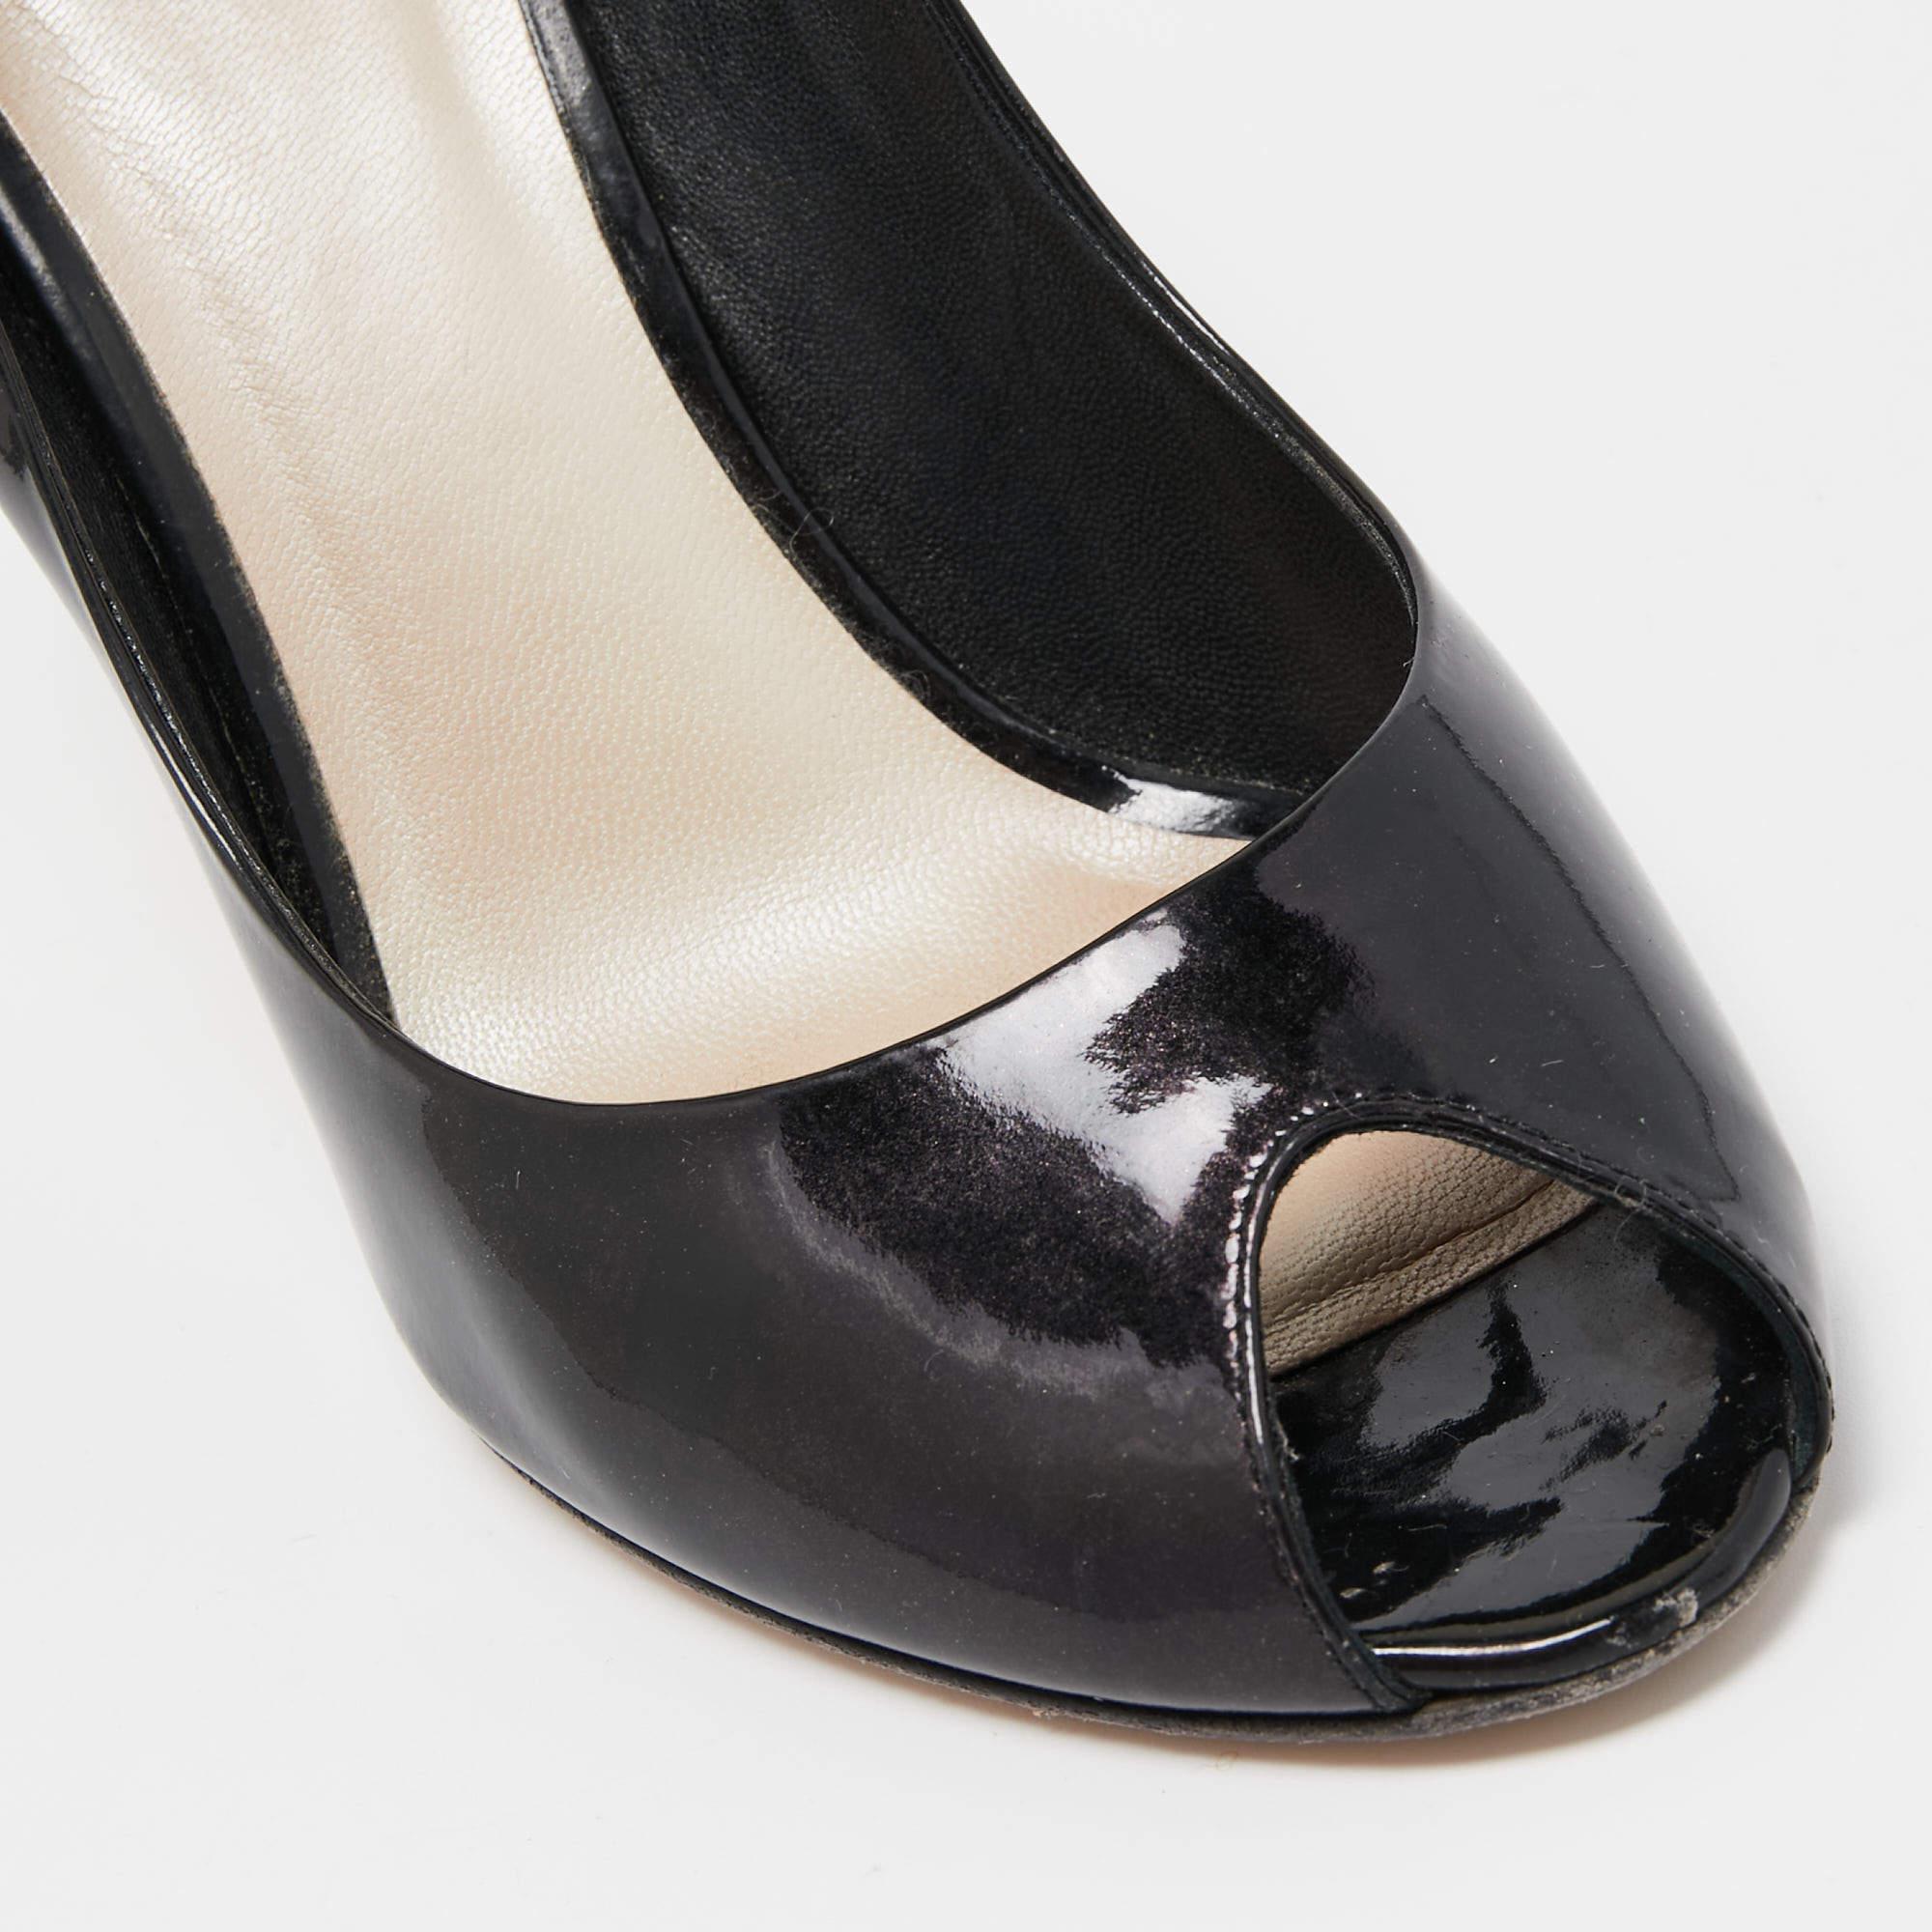 Dior Black Patent Miss Dior Peep Toe Pumps Size 38 For Sale 3